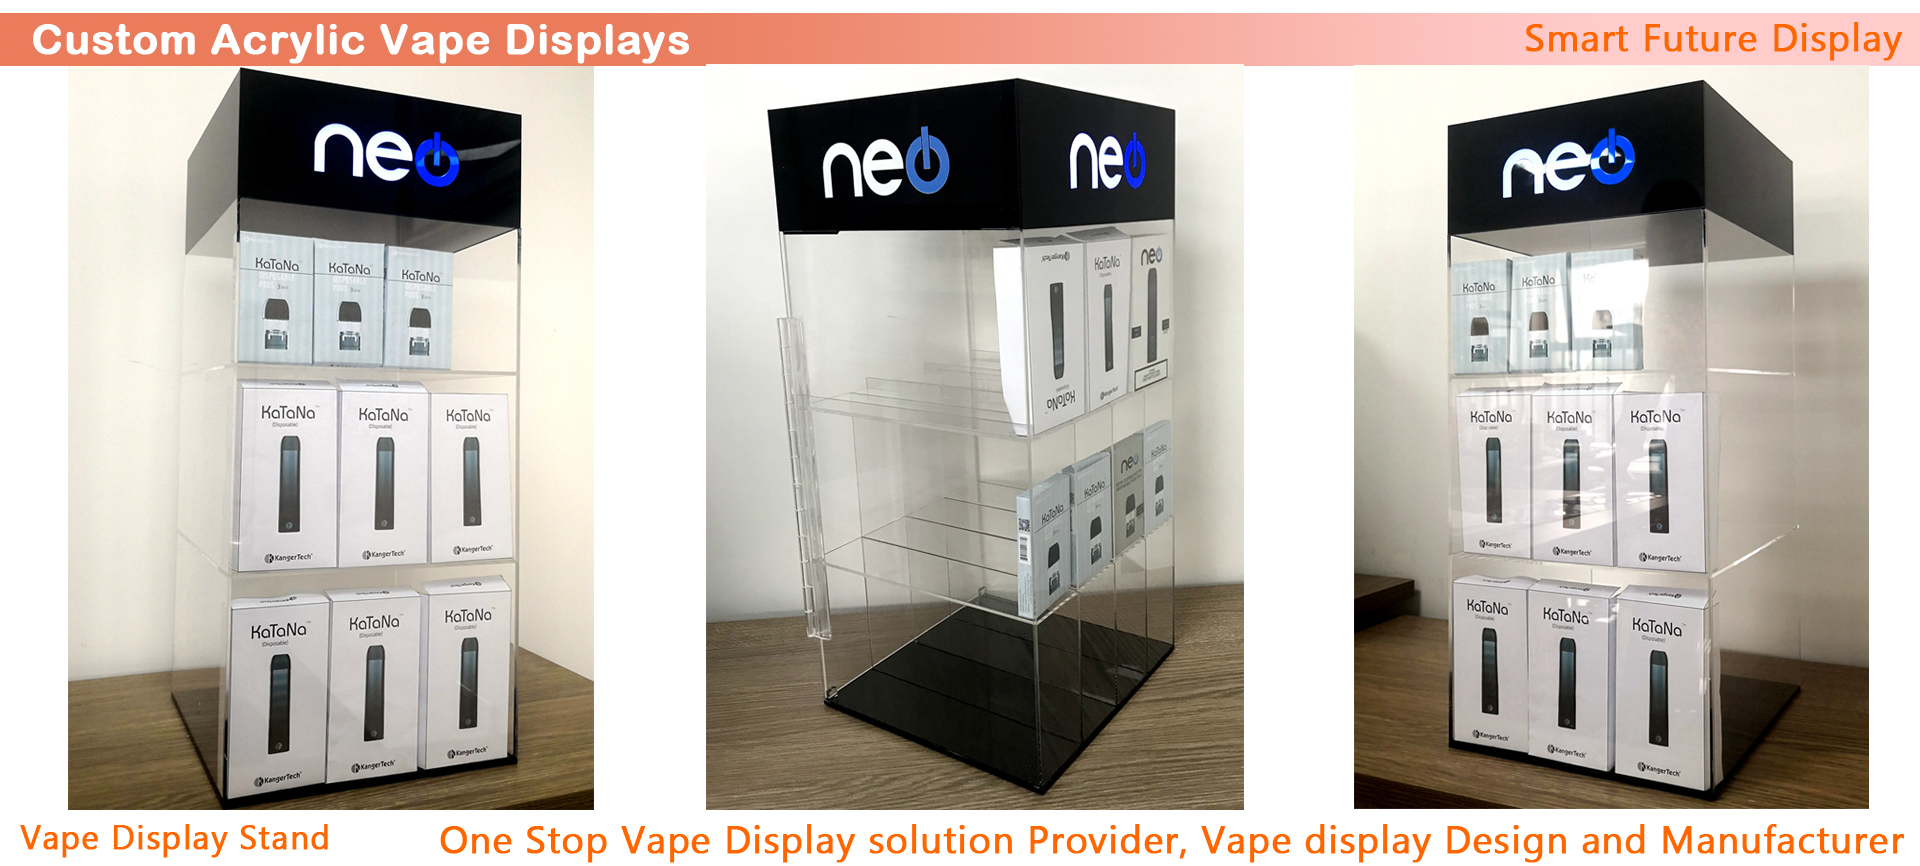 NEO vape display stand 16.jpg